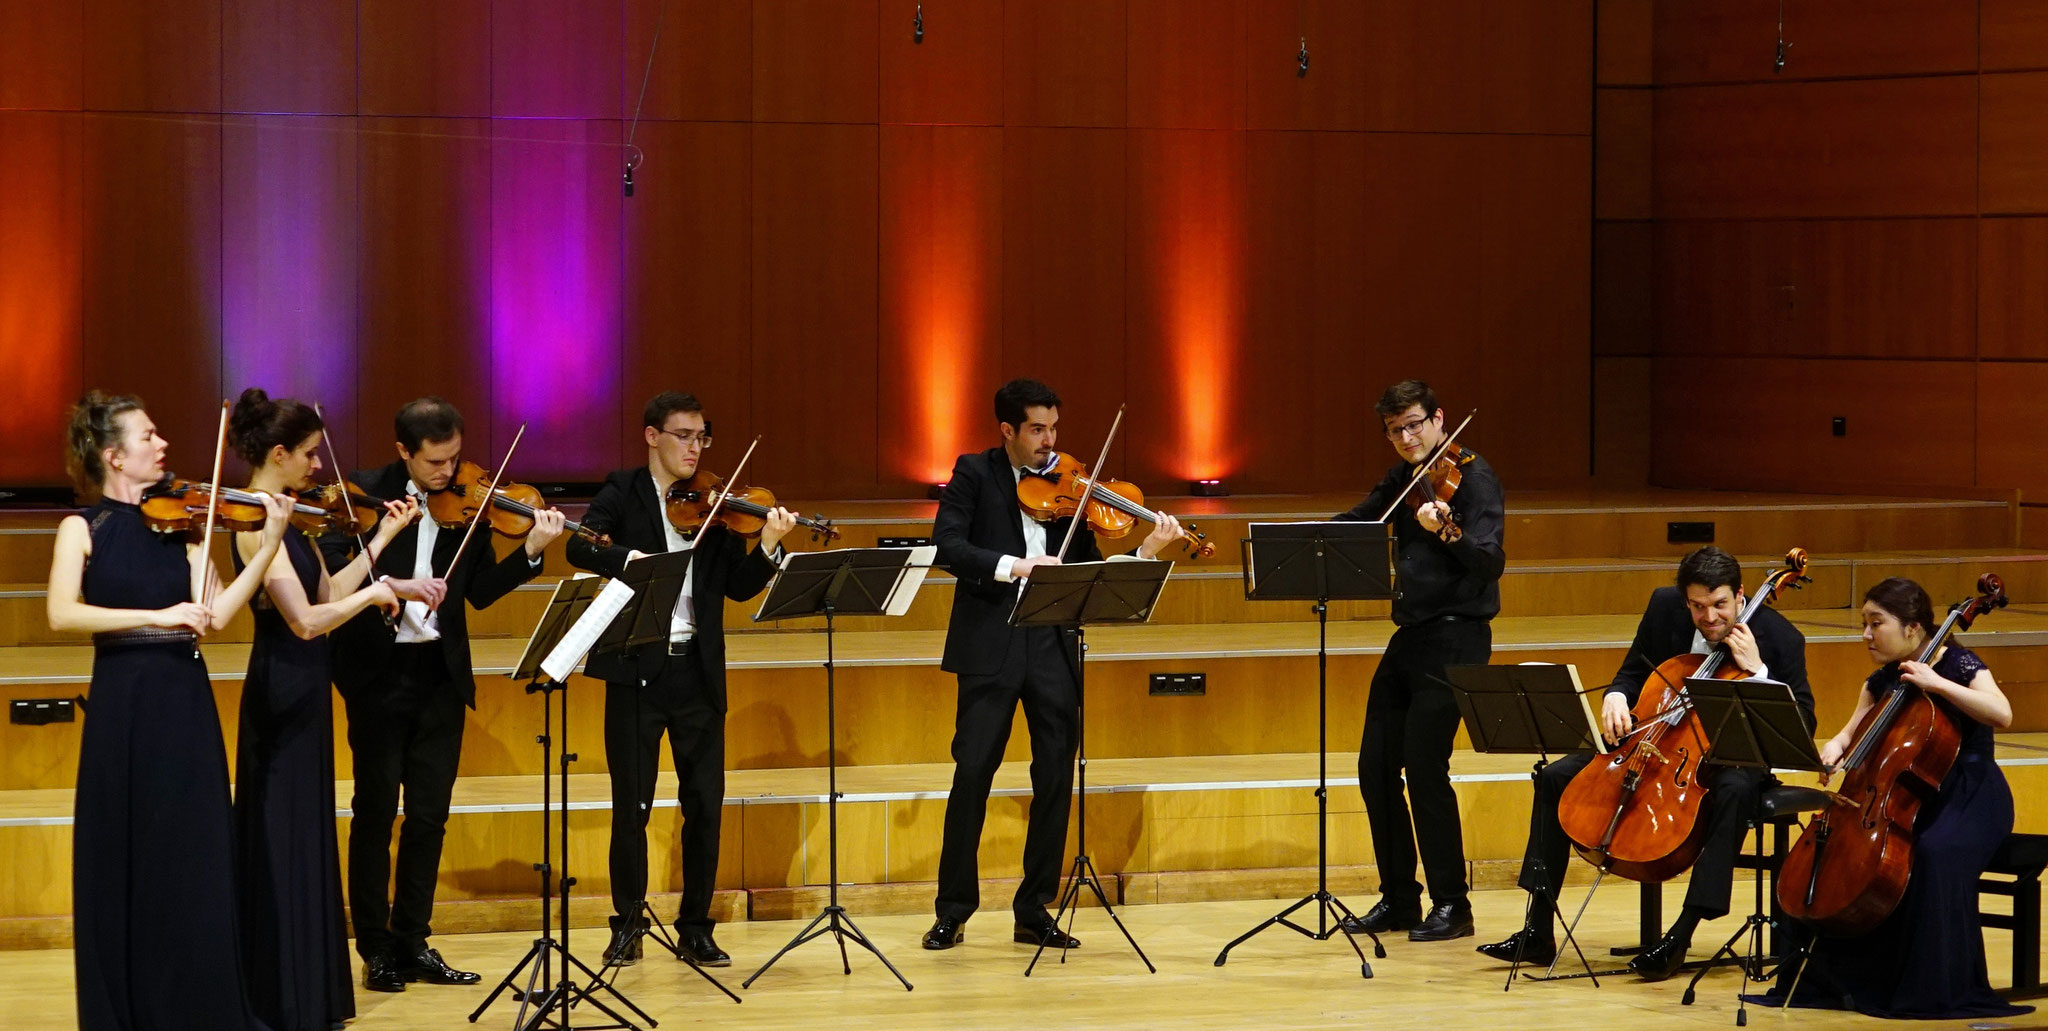 Stringpower with the Octet by Mendelssohn